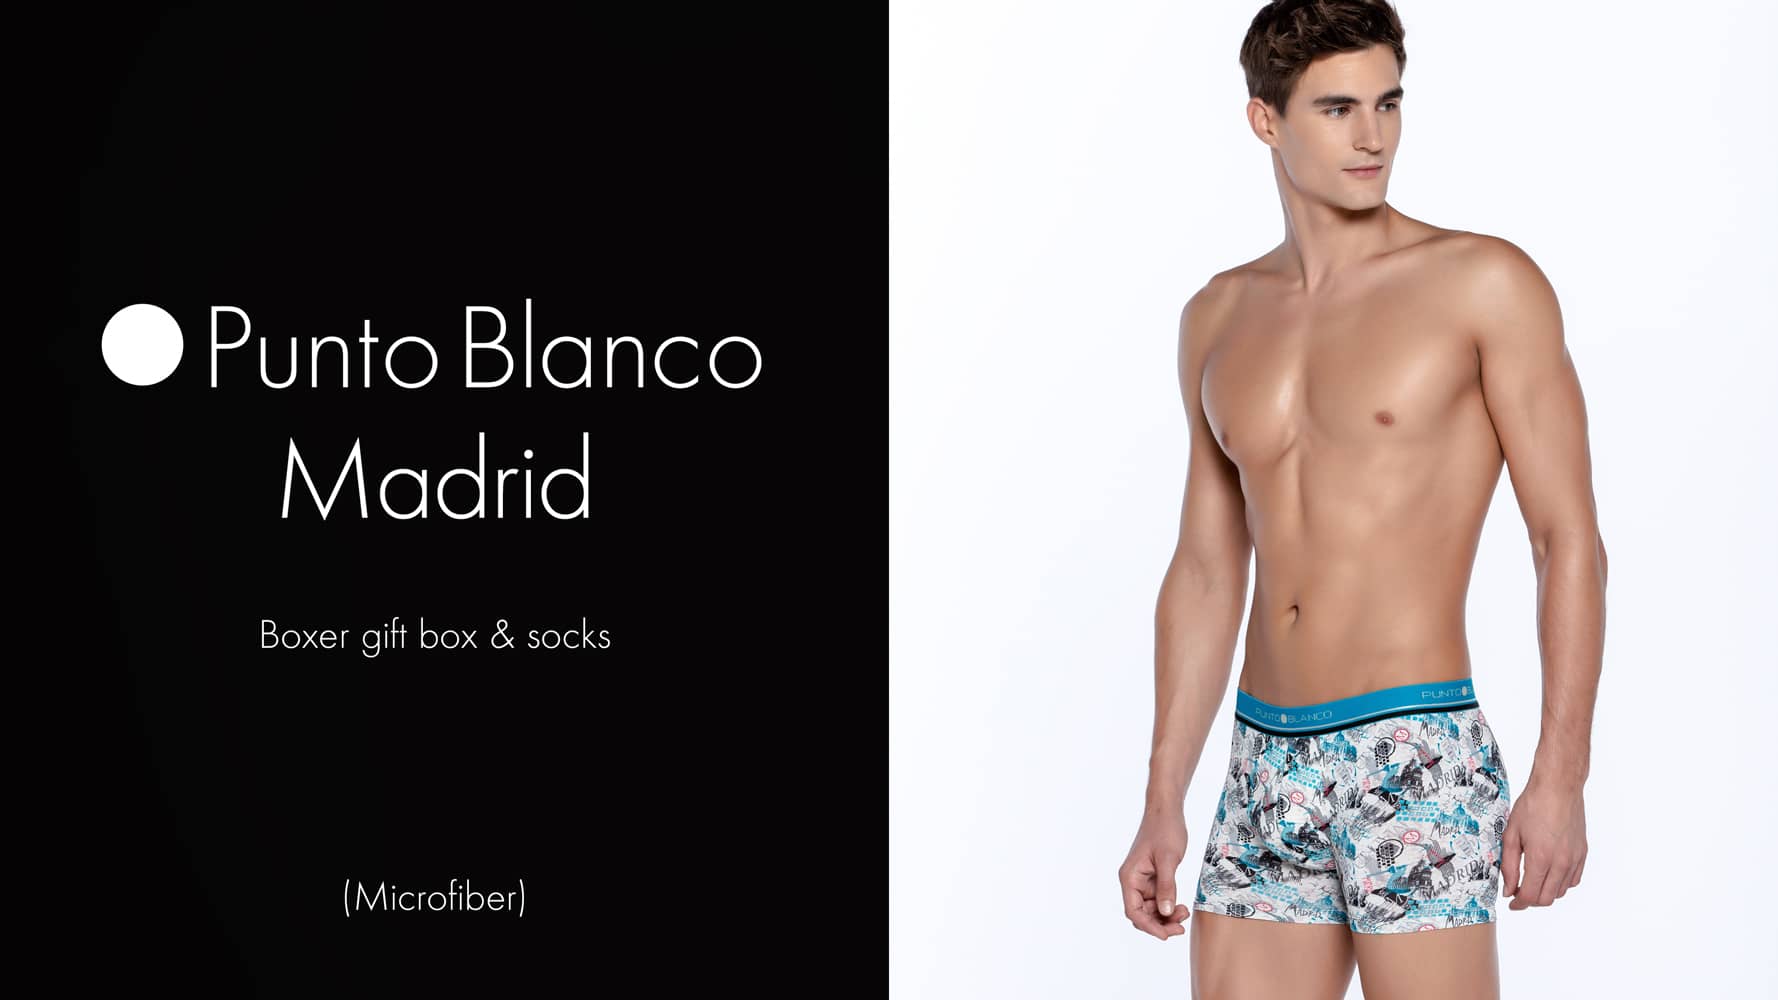 Boxer gift box and socks - Madrid